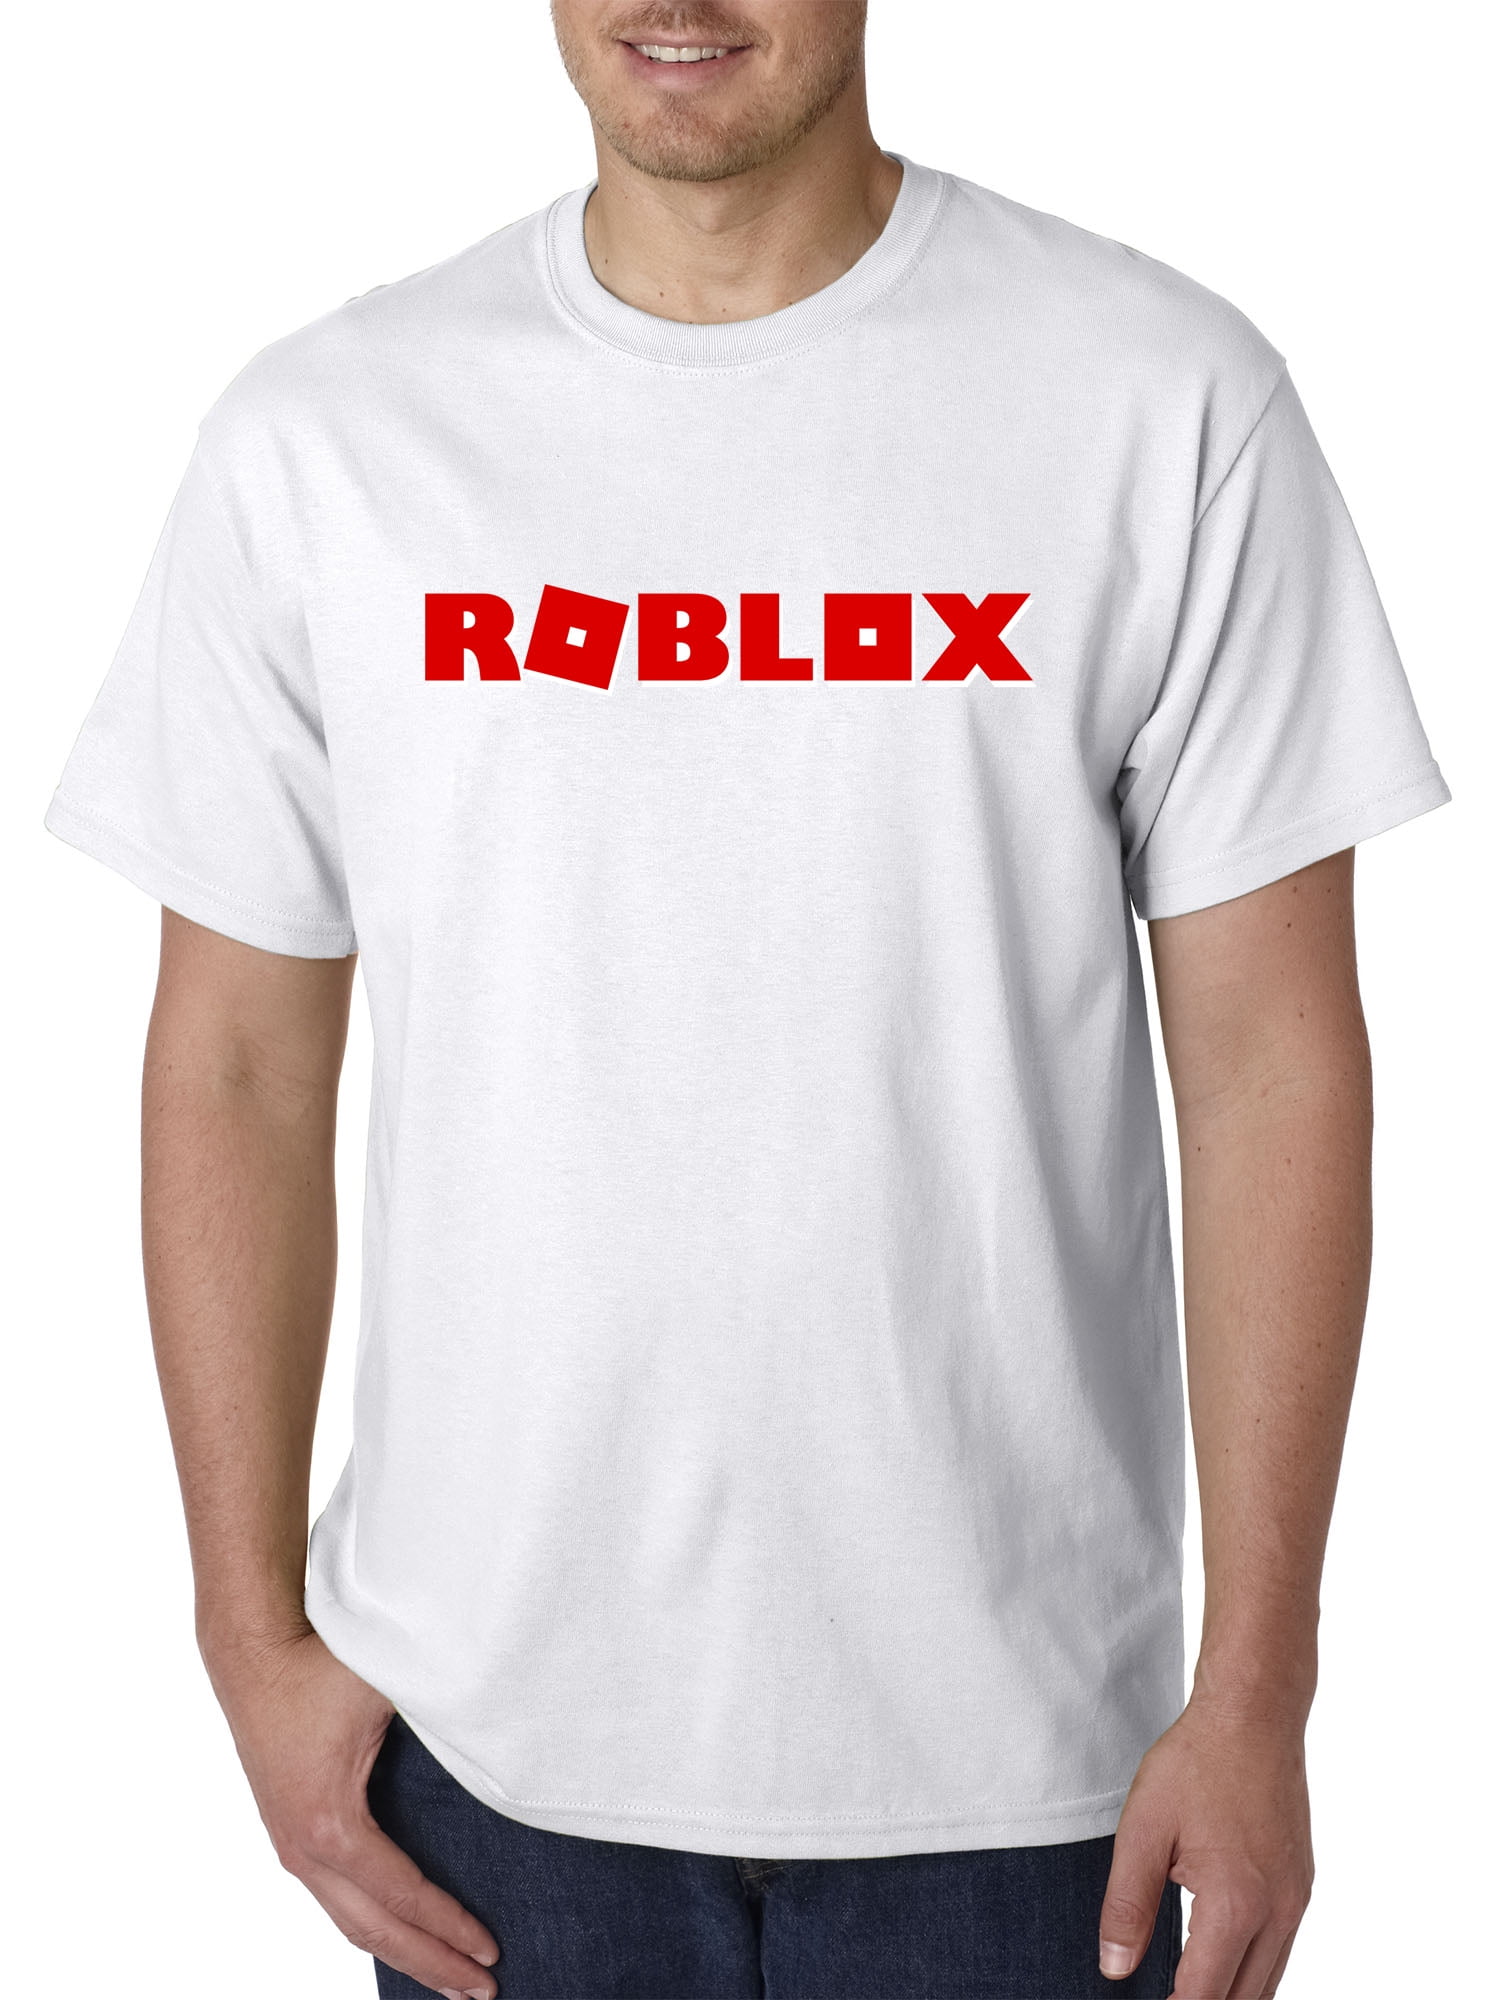 New Way New Way 922 Unisex T Shirt Roblox Logo Game Filled - new way 922 unisex t shirt roblox logo game filled